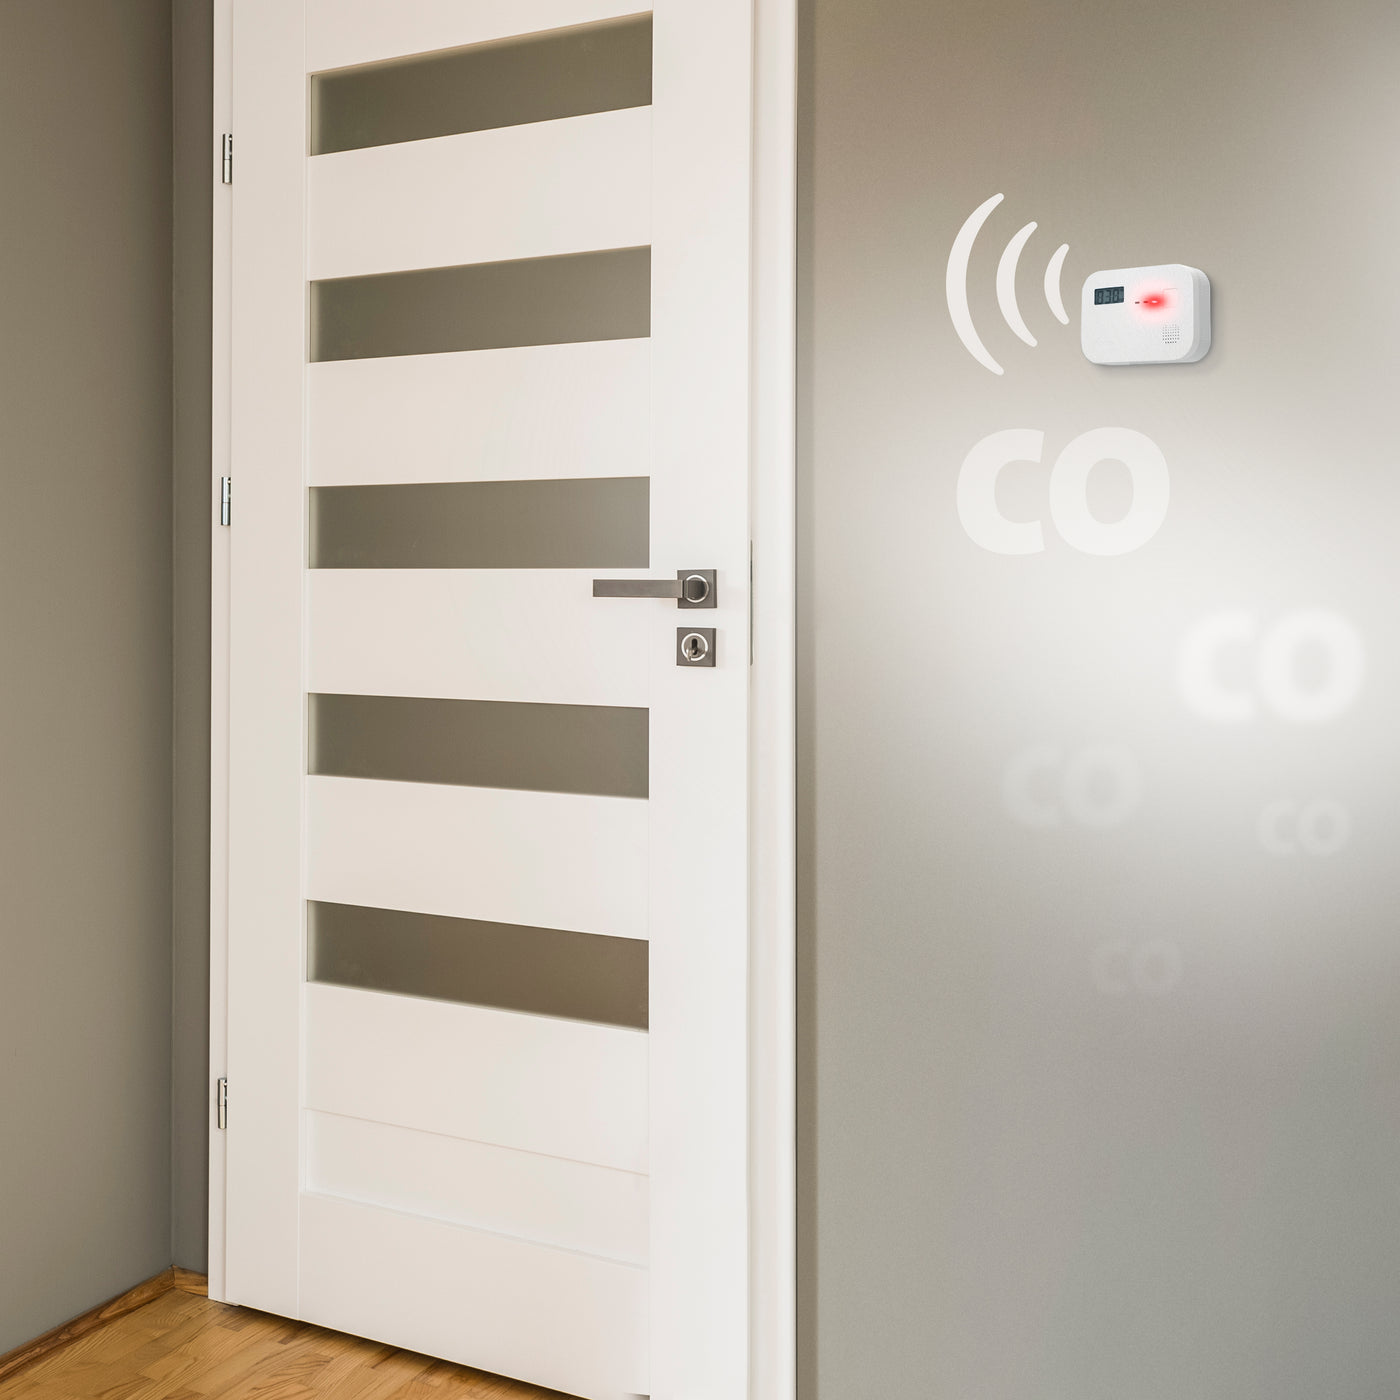 Alecto COA3910 - Carbon monoxide alarm with 10 year sensor runtime and display